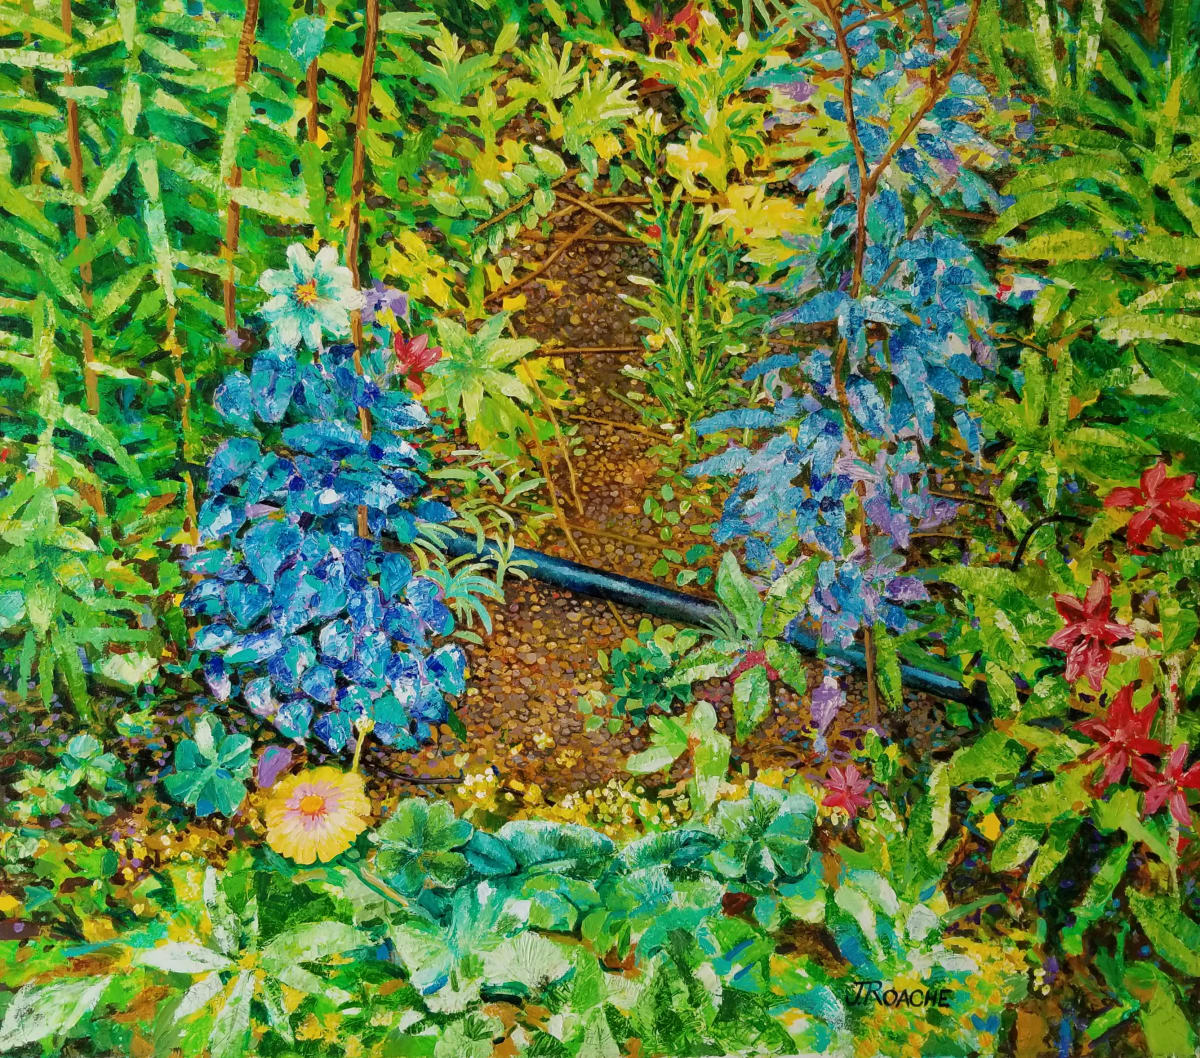 Garden at Giverny by Joe Roache 